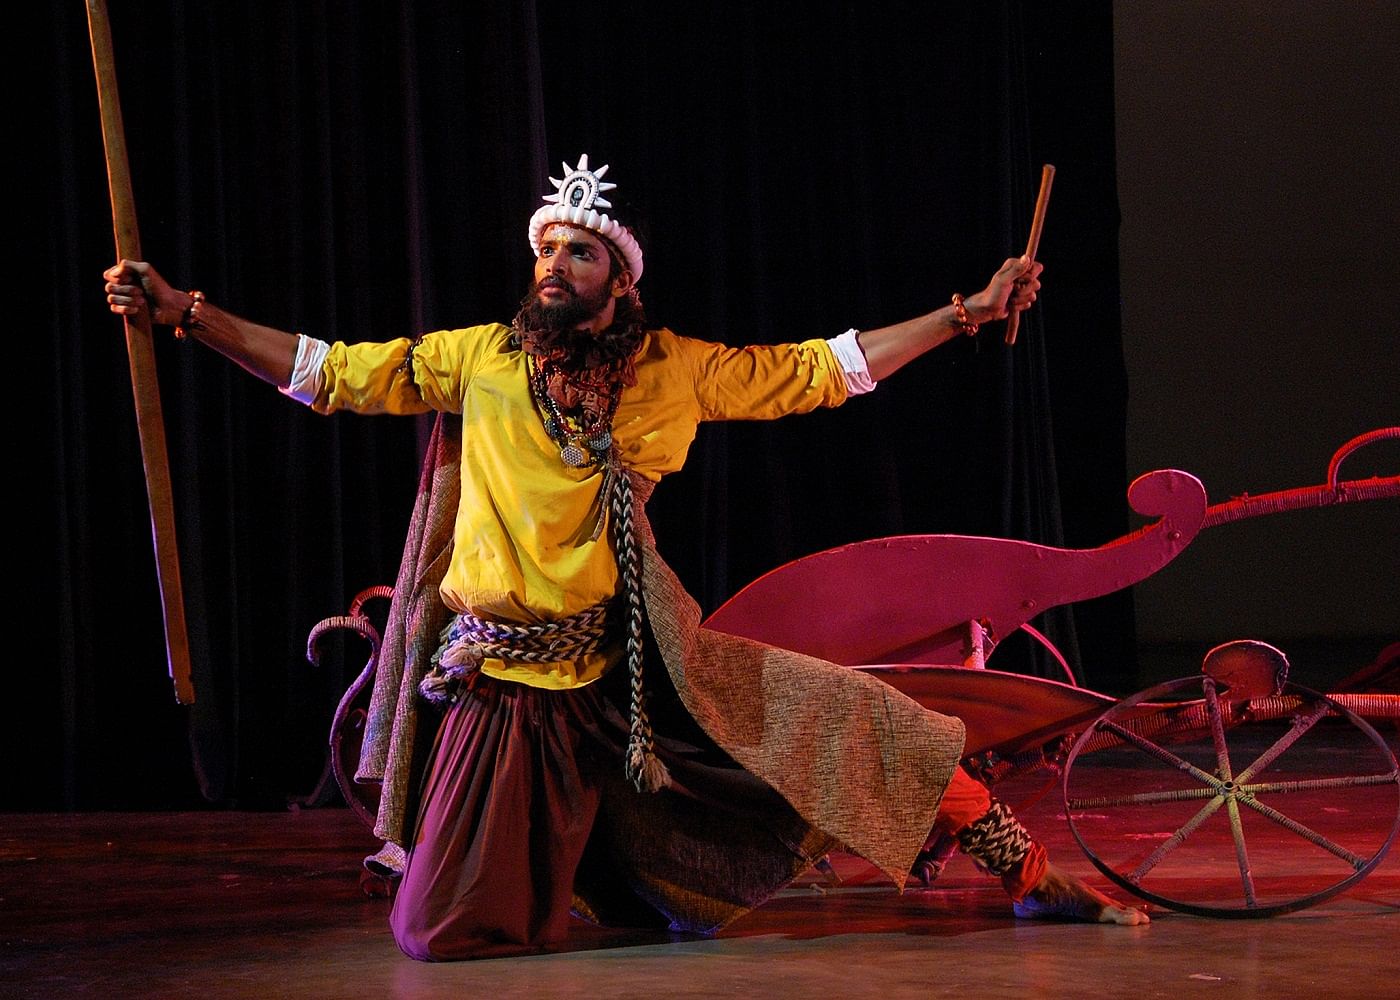 Performance of ‘Karnasangatya’ by Ganesh Mandarti. PHOTO CREDIT: RAMESH P K